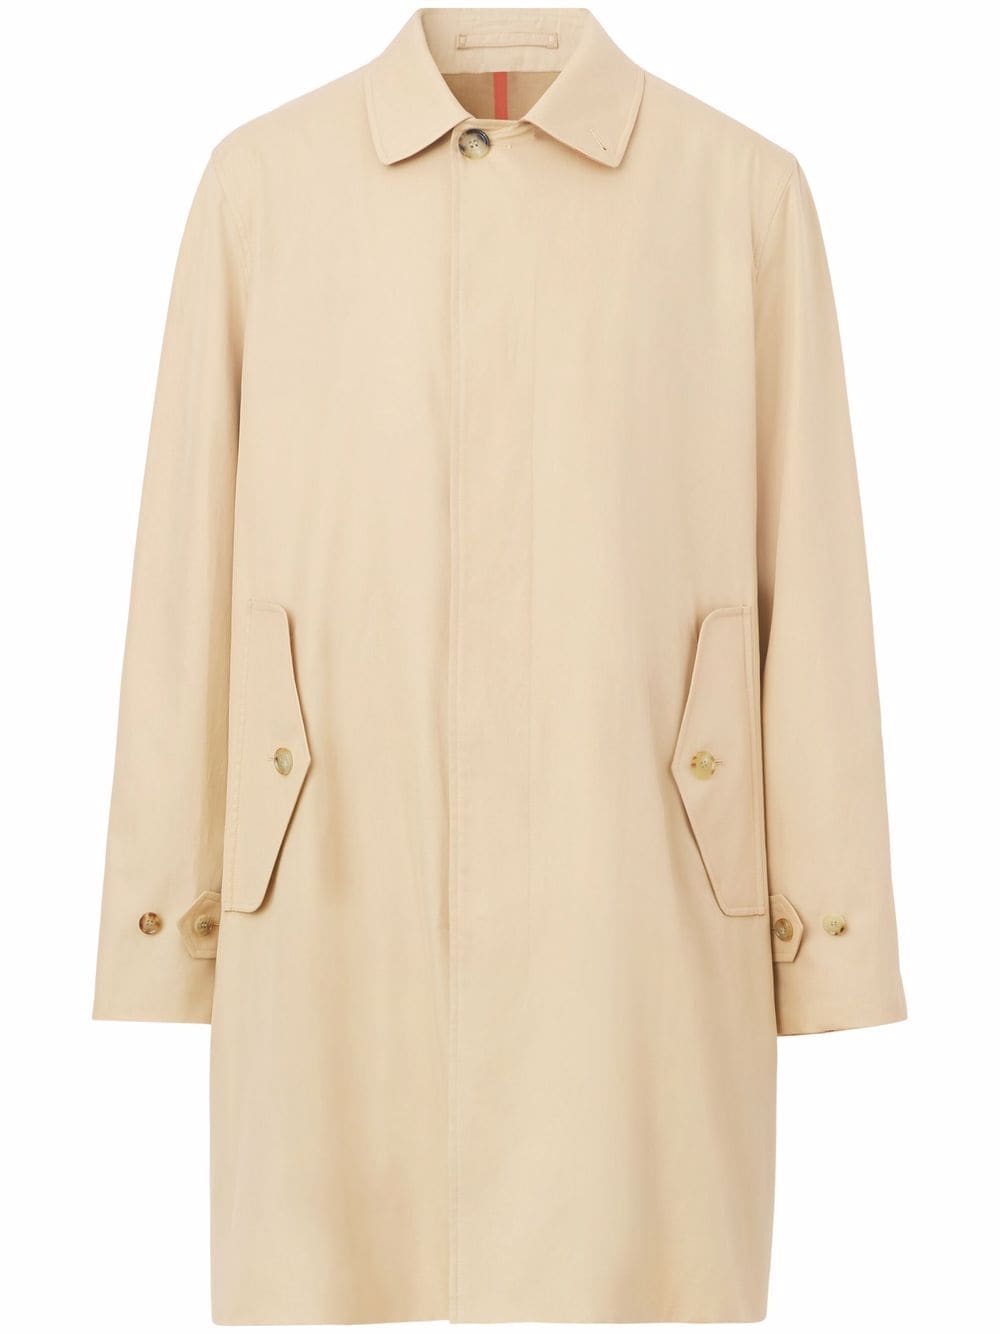 Burberry cotton gabardine car coat - Neutrals